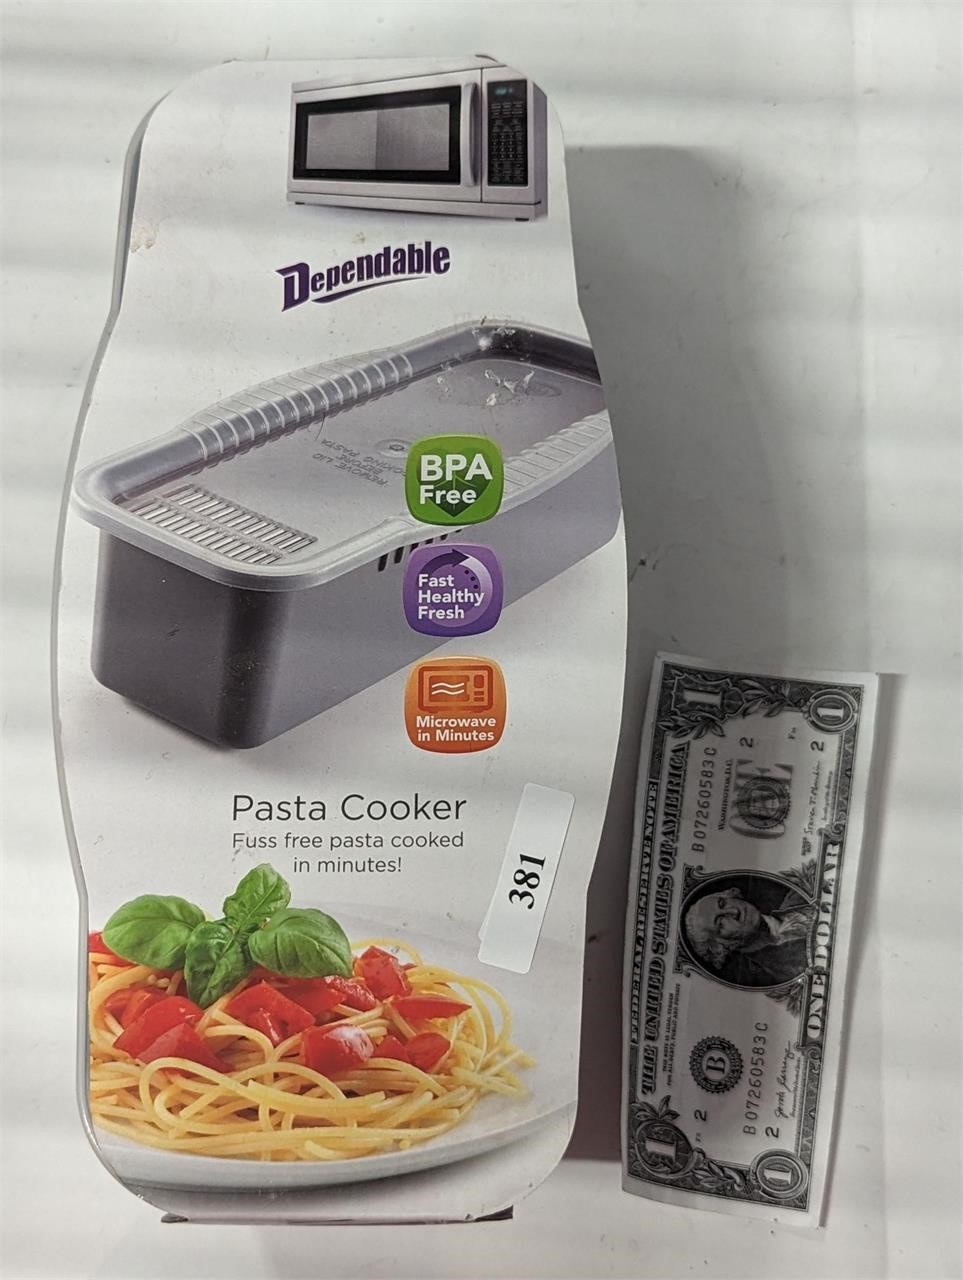 New pasta cooker